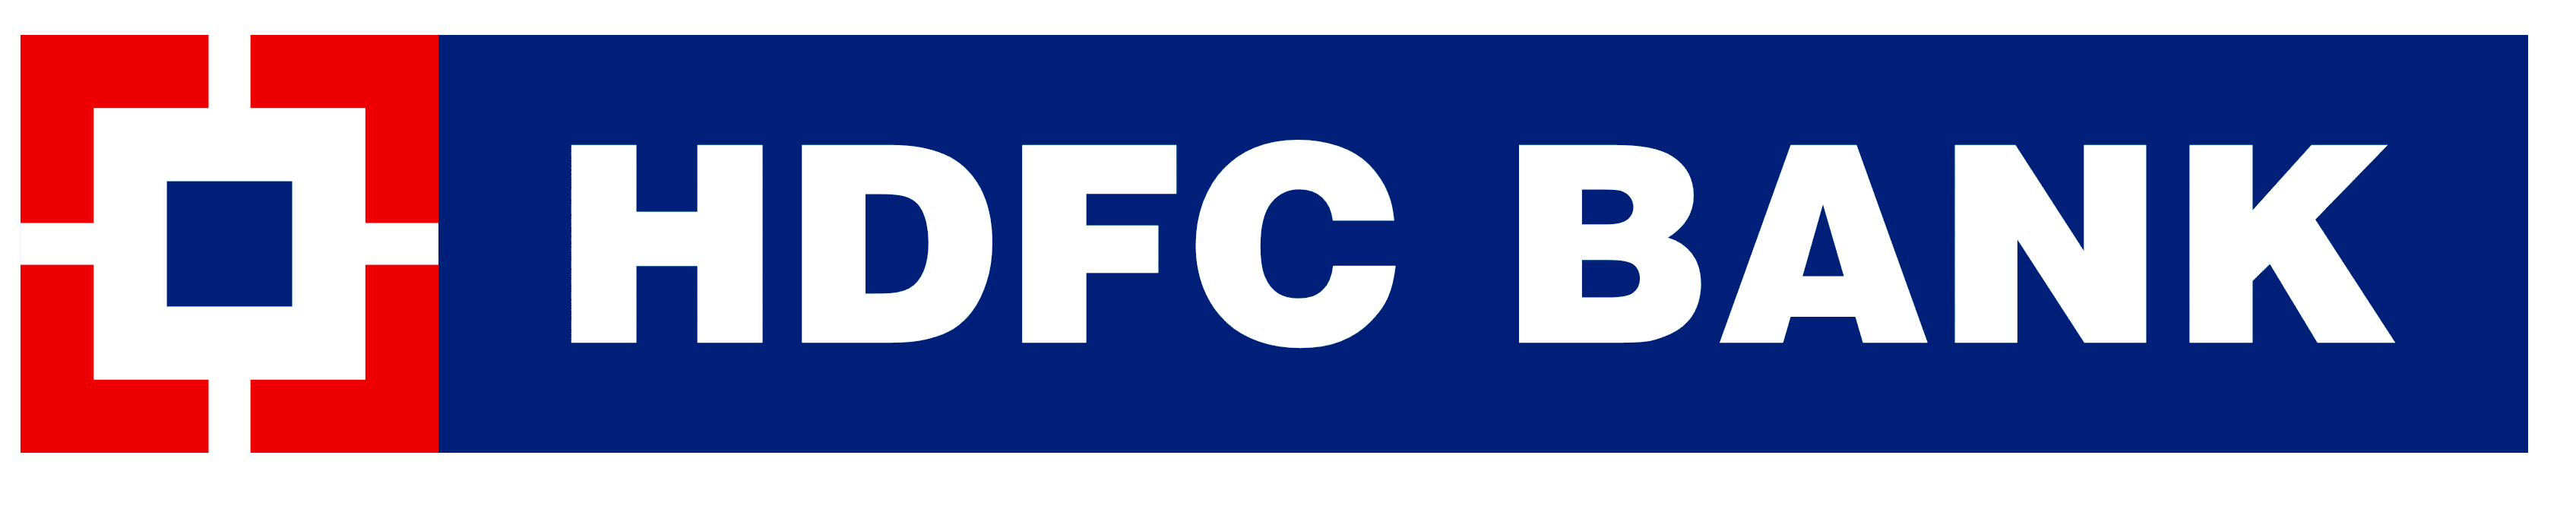 HDFC Bank Logo - HDFC Bank – Logos Download